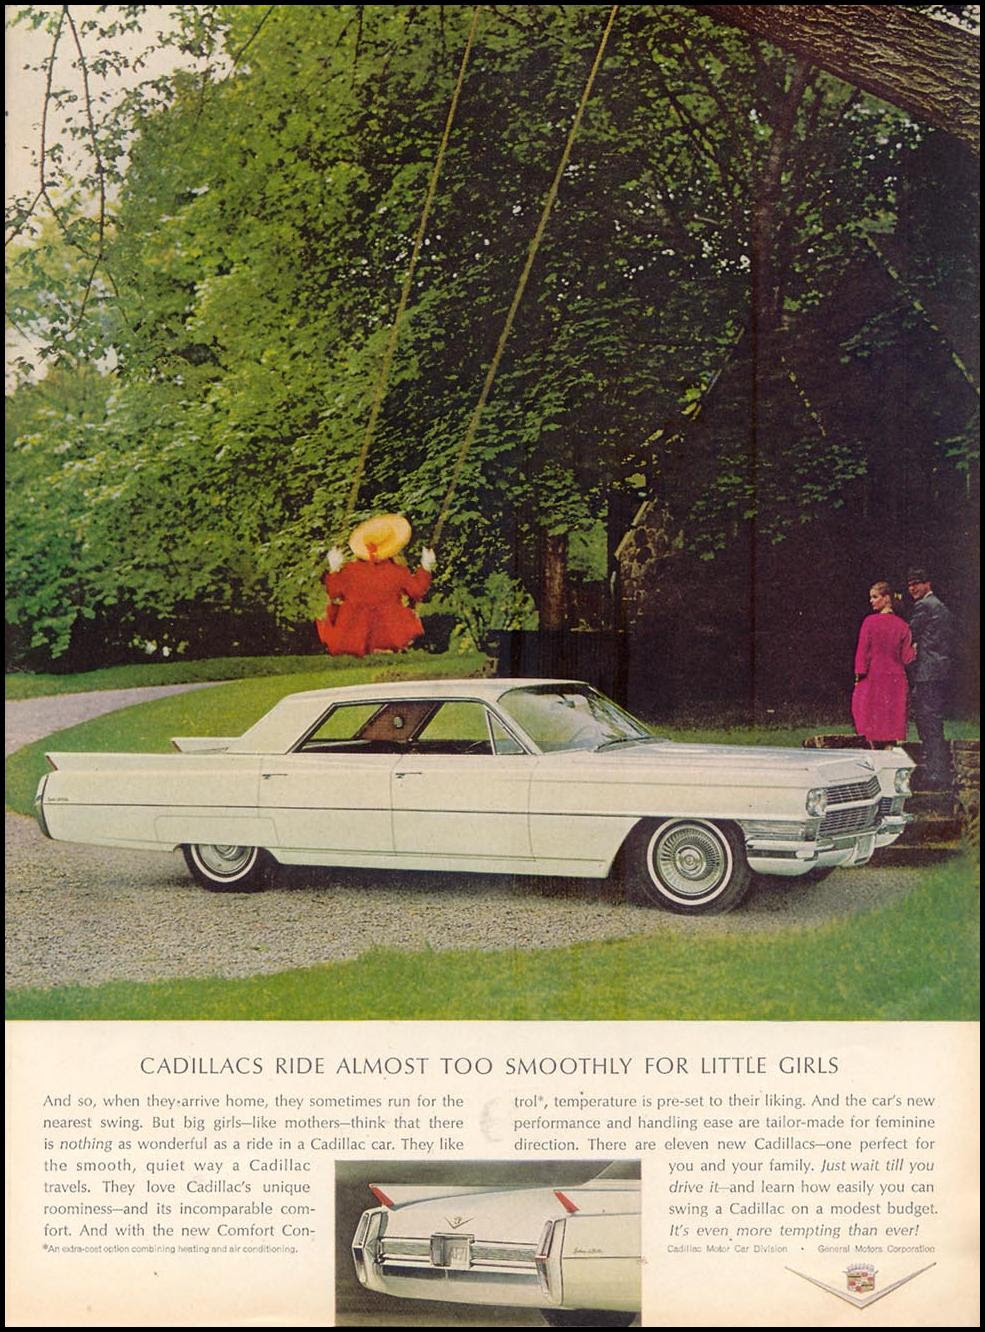 CADILLAC AUTOMOBILES
TIME
12/06/1963
p. 7